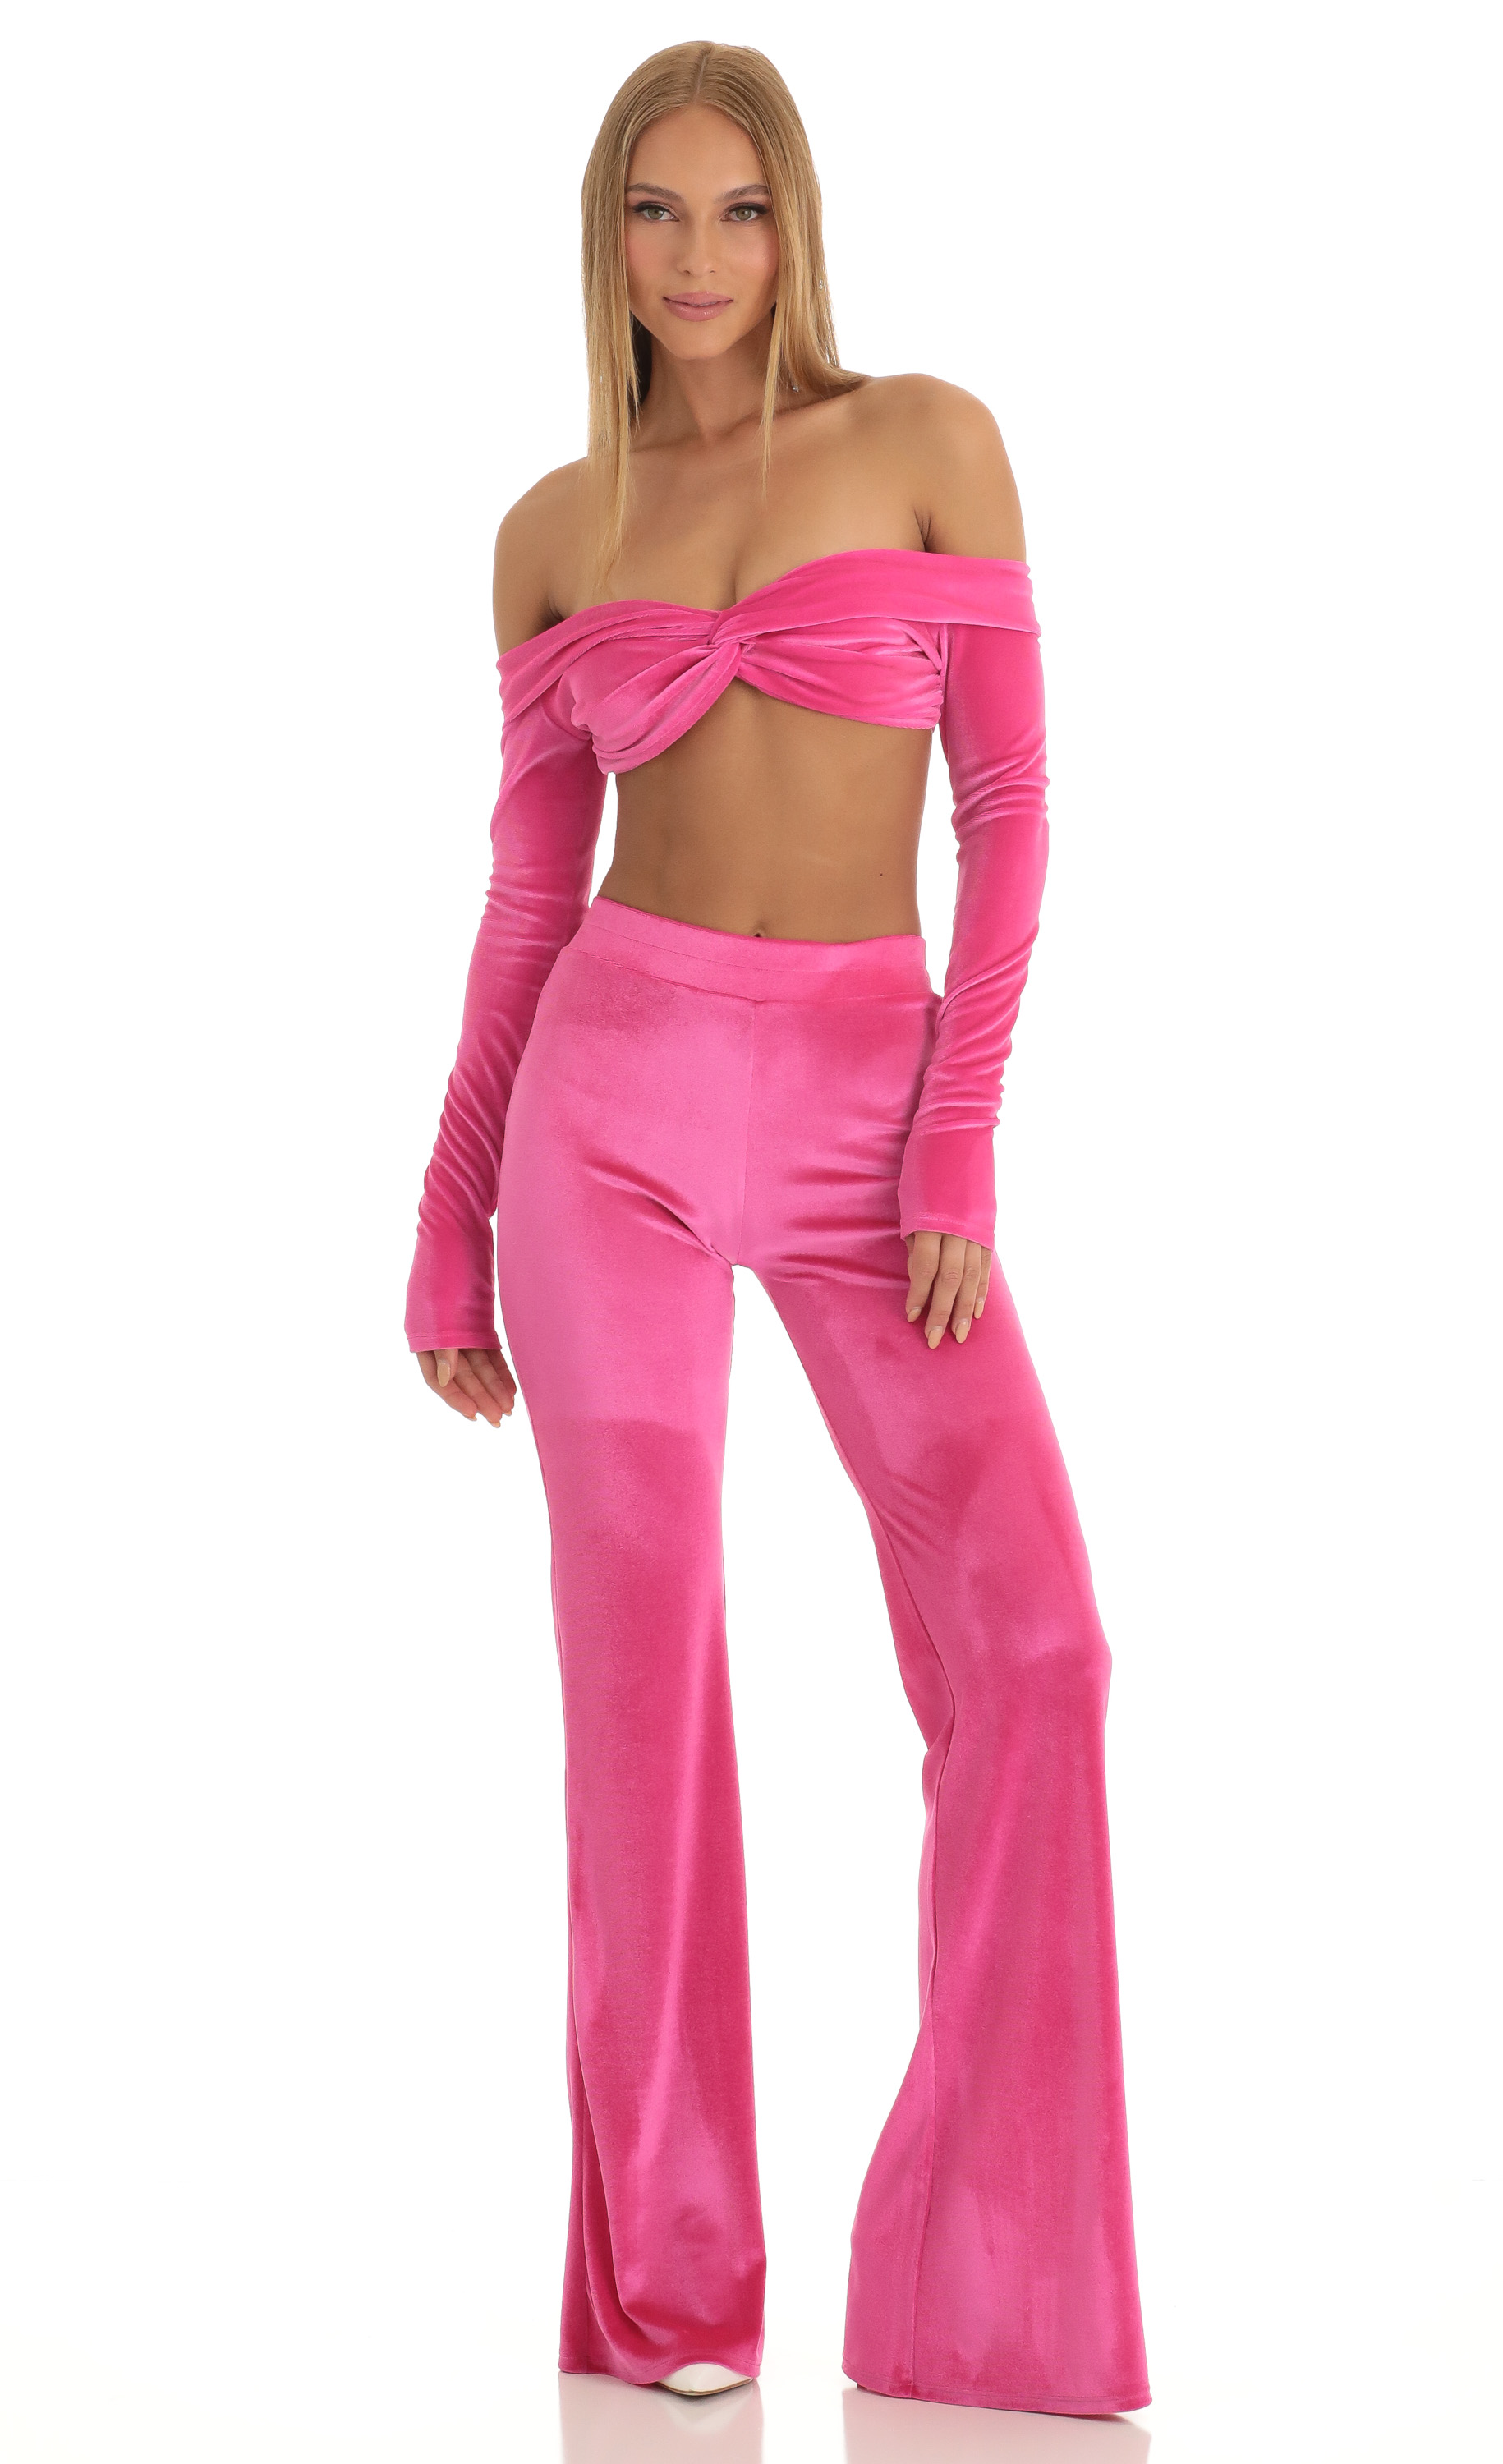 Zayla Velvet Two Piece Pant Set in Hot Pink